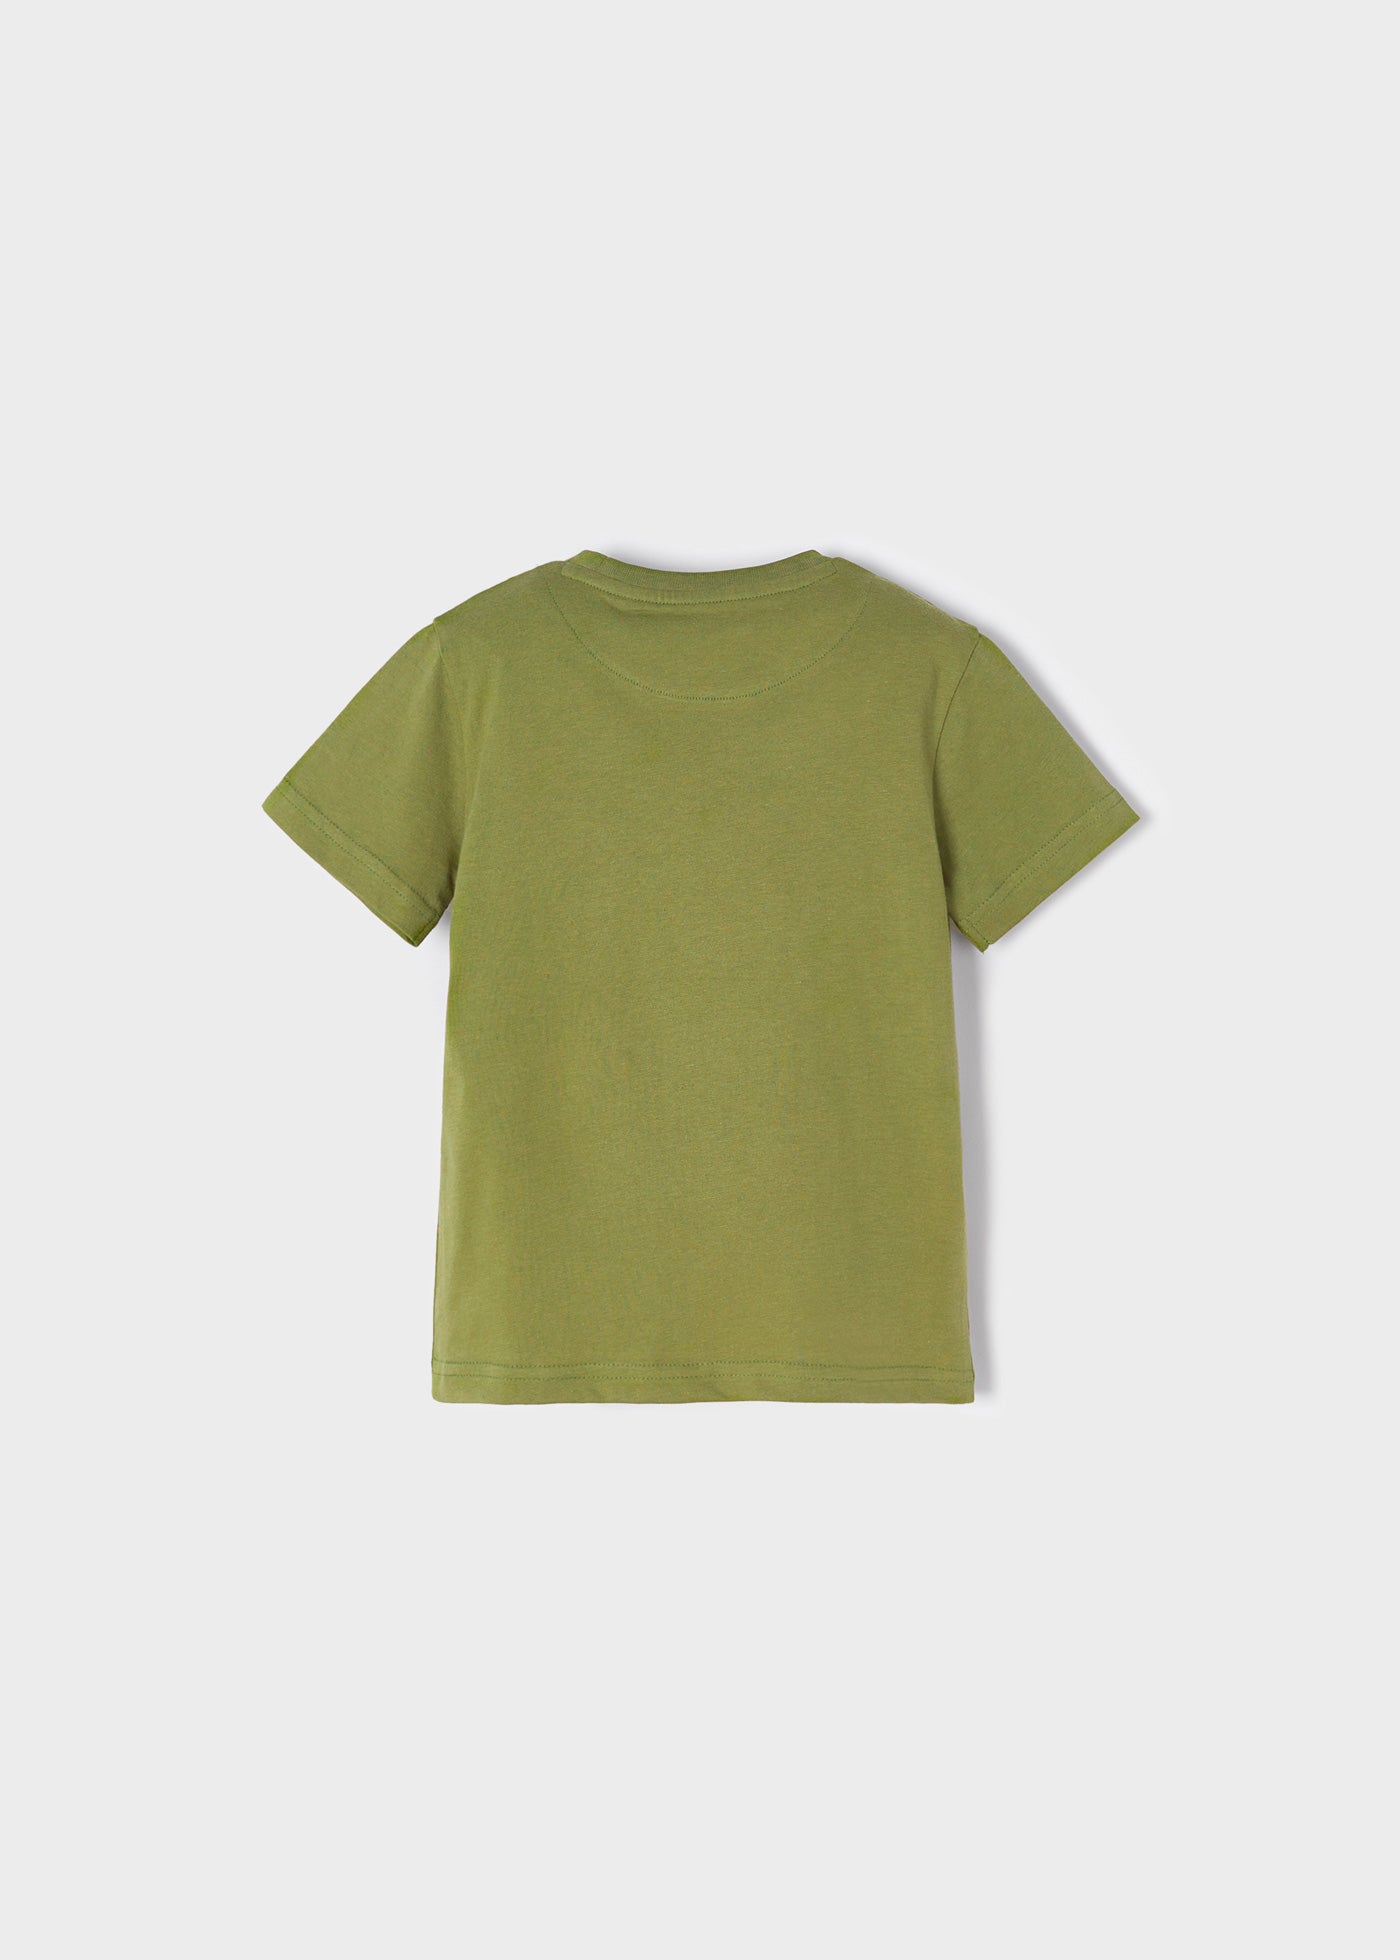 Mayoral Mini T-Shirt w/ Binoculars_ Green 3018-83